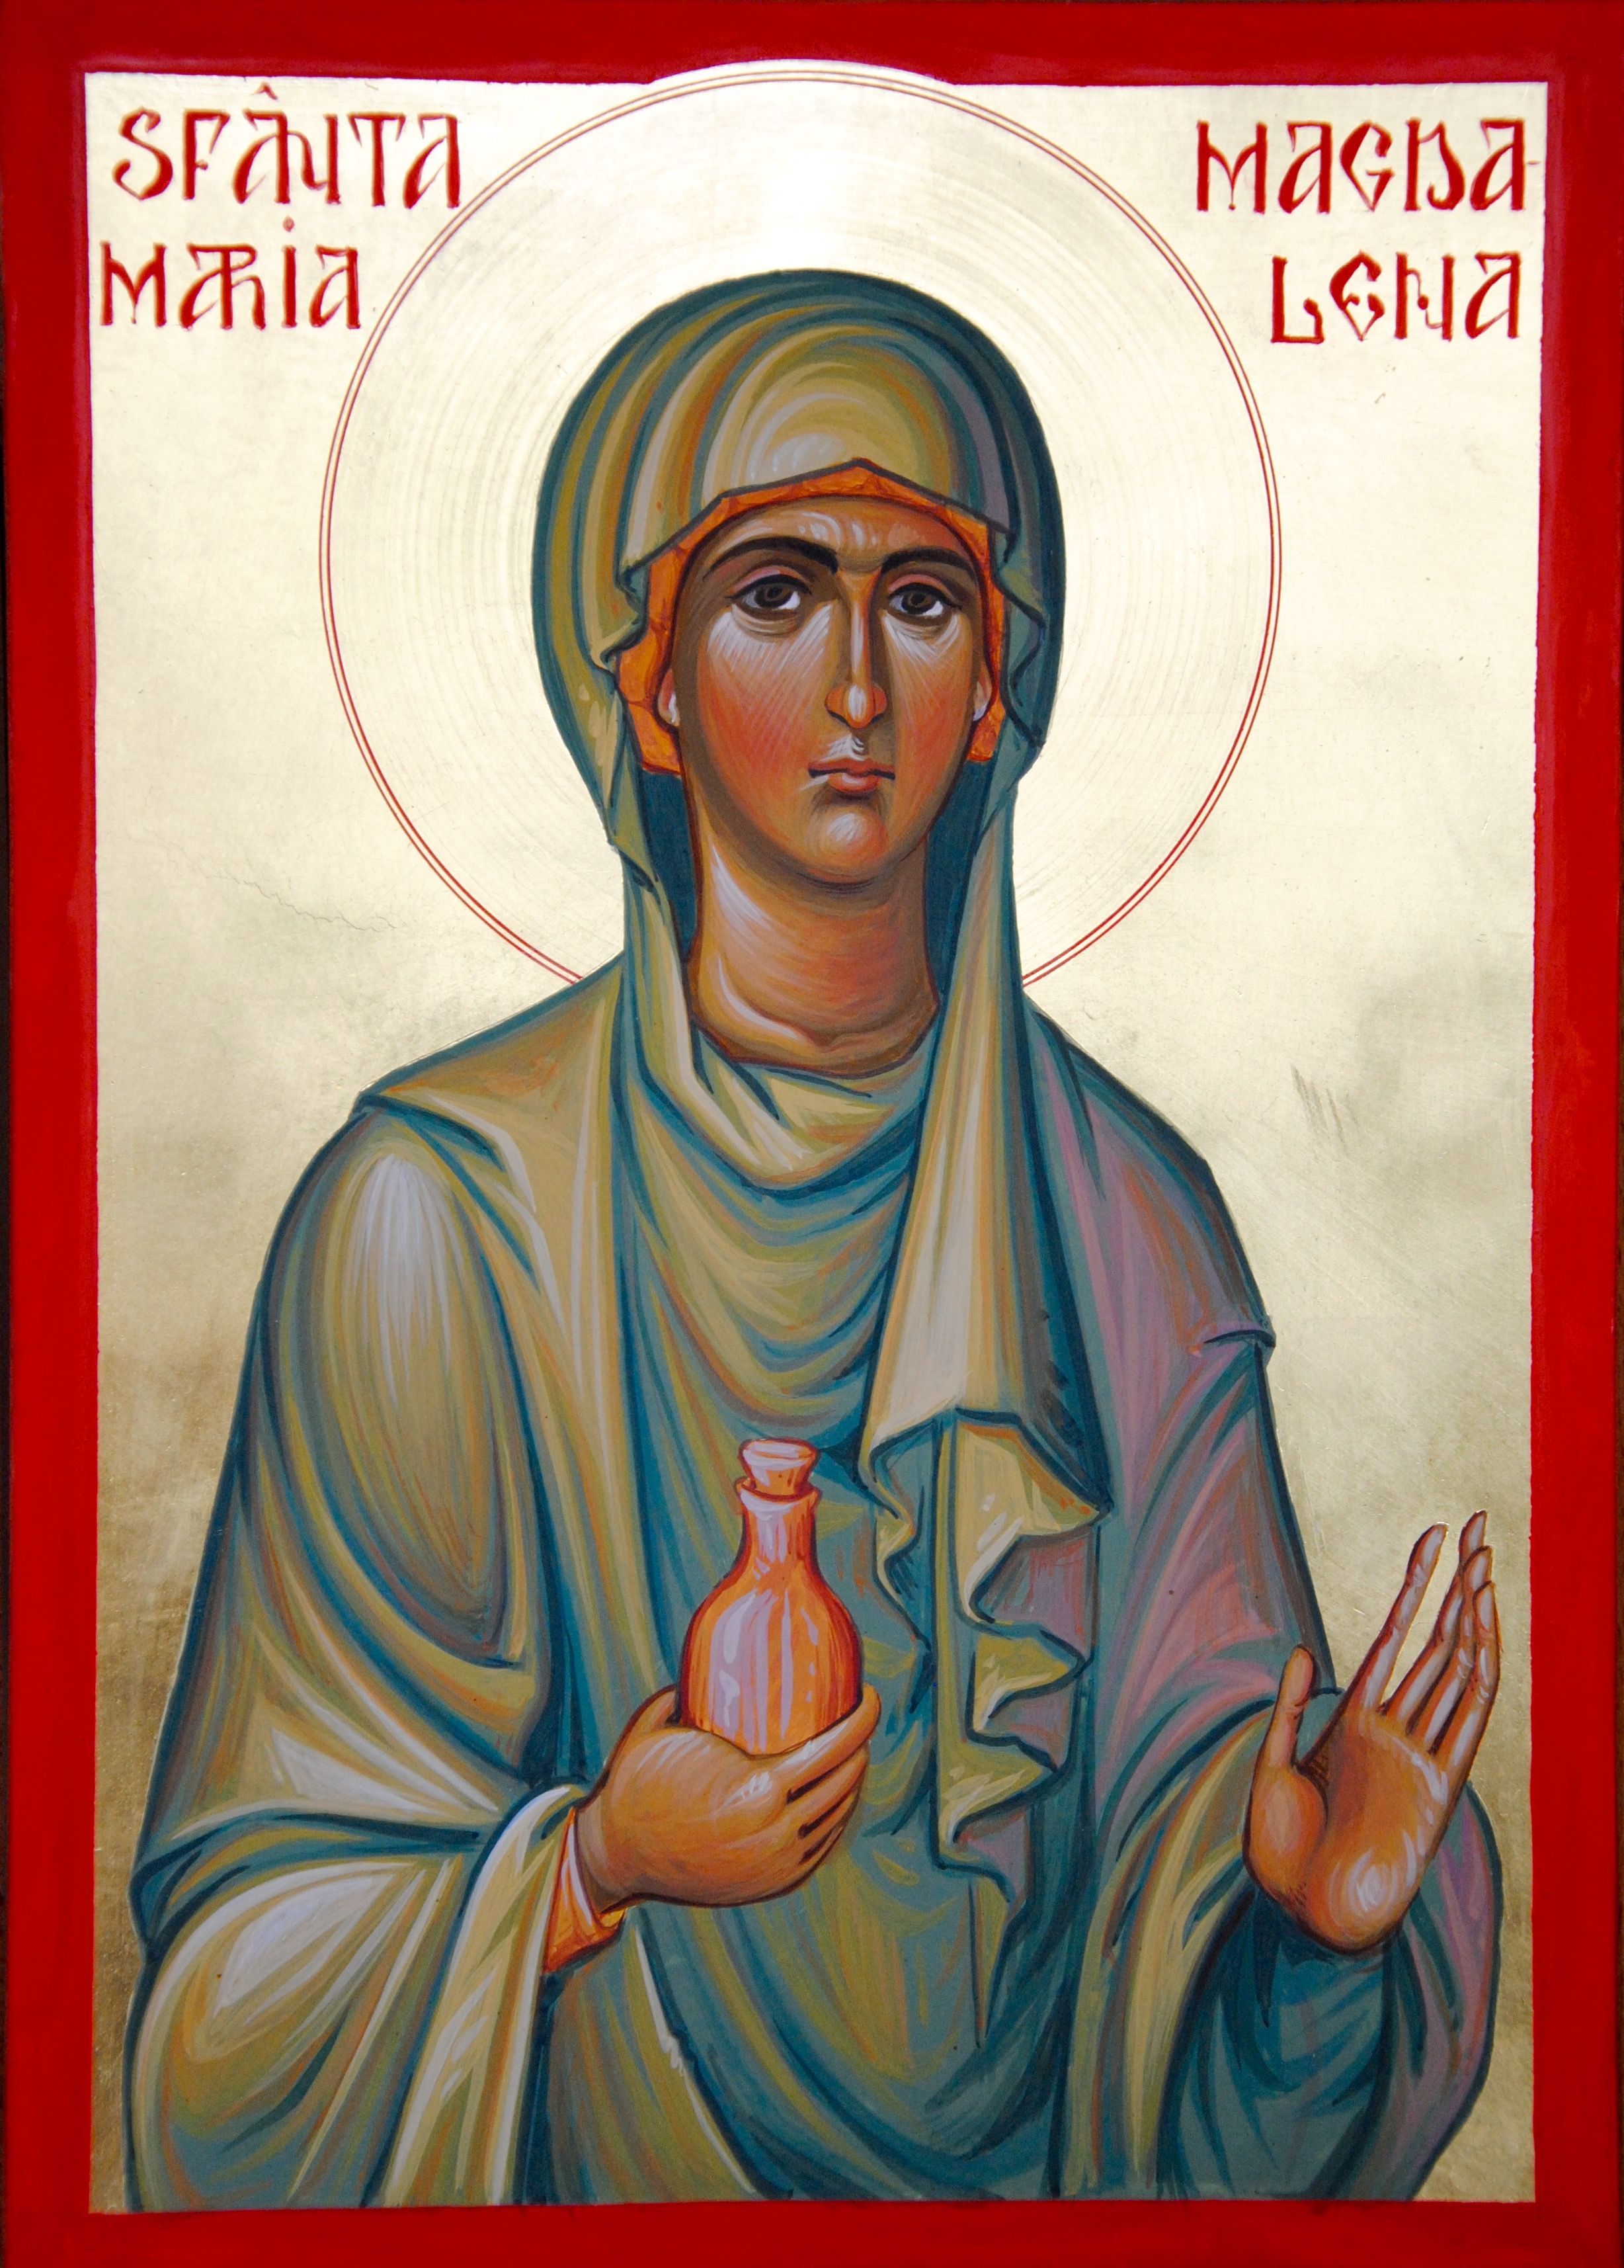 St. Mary Magdalene (July 22) by Costel Nacu. Mary magdalene